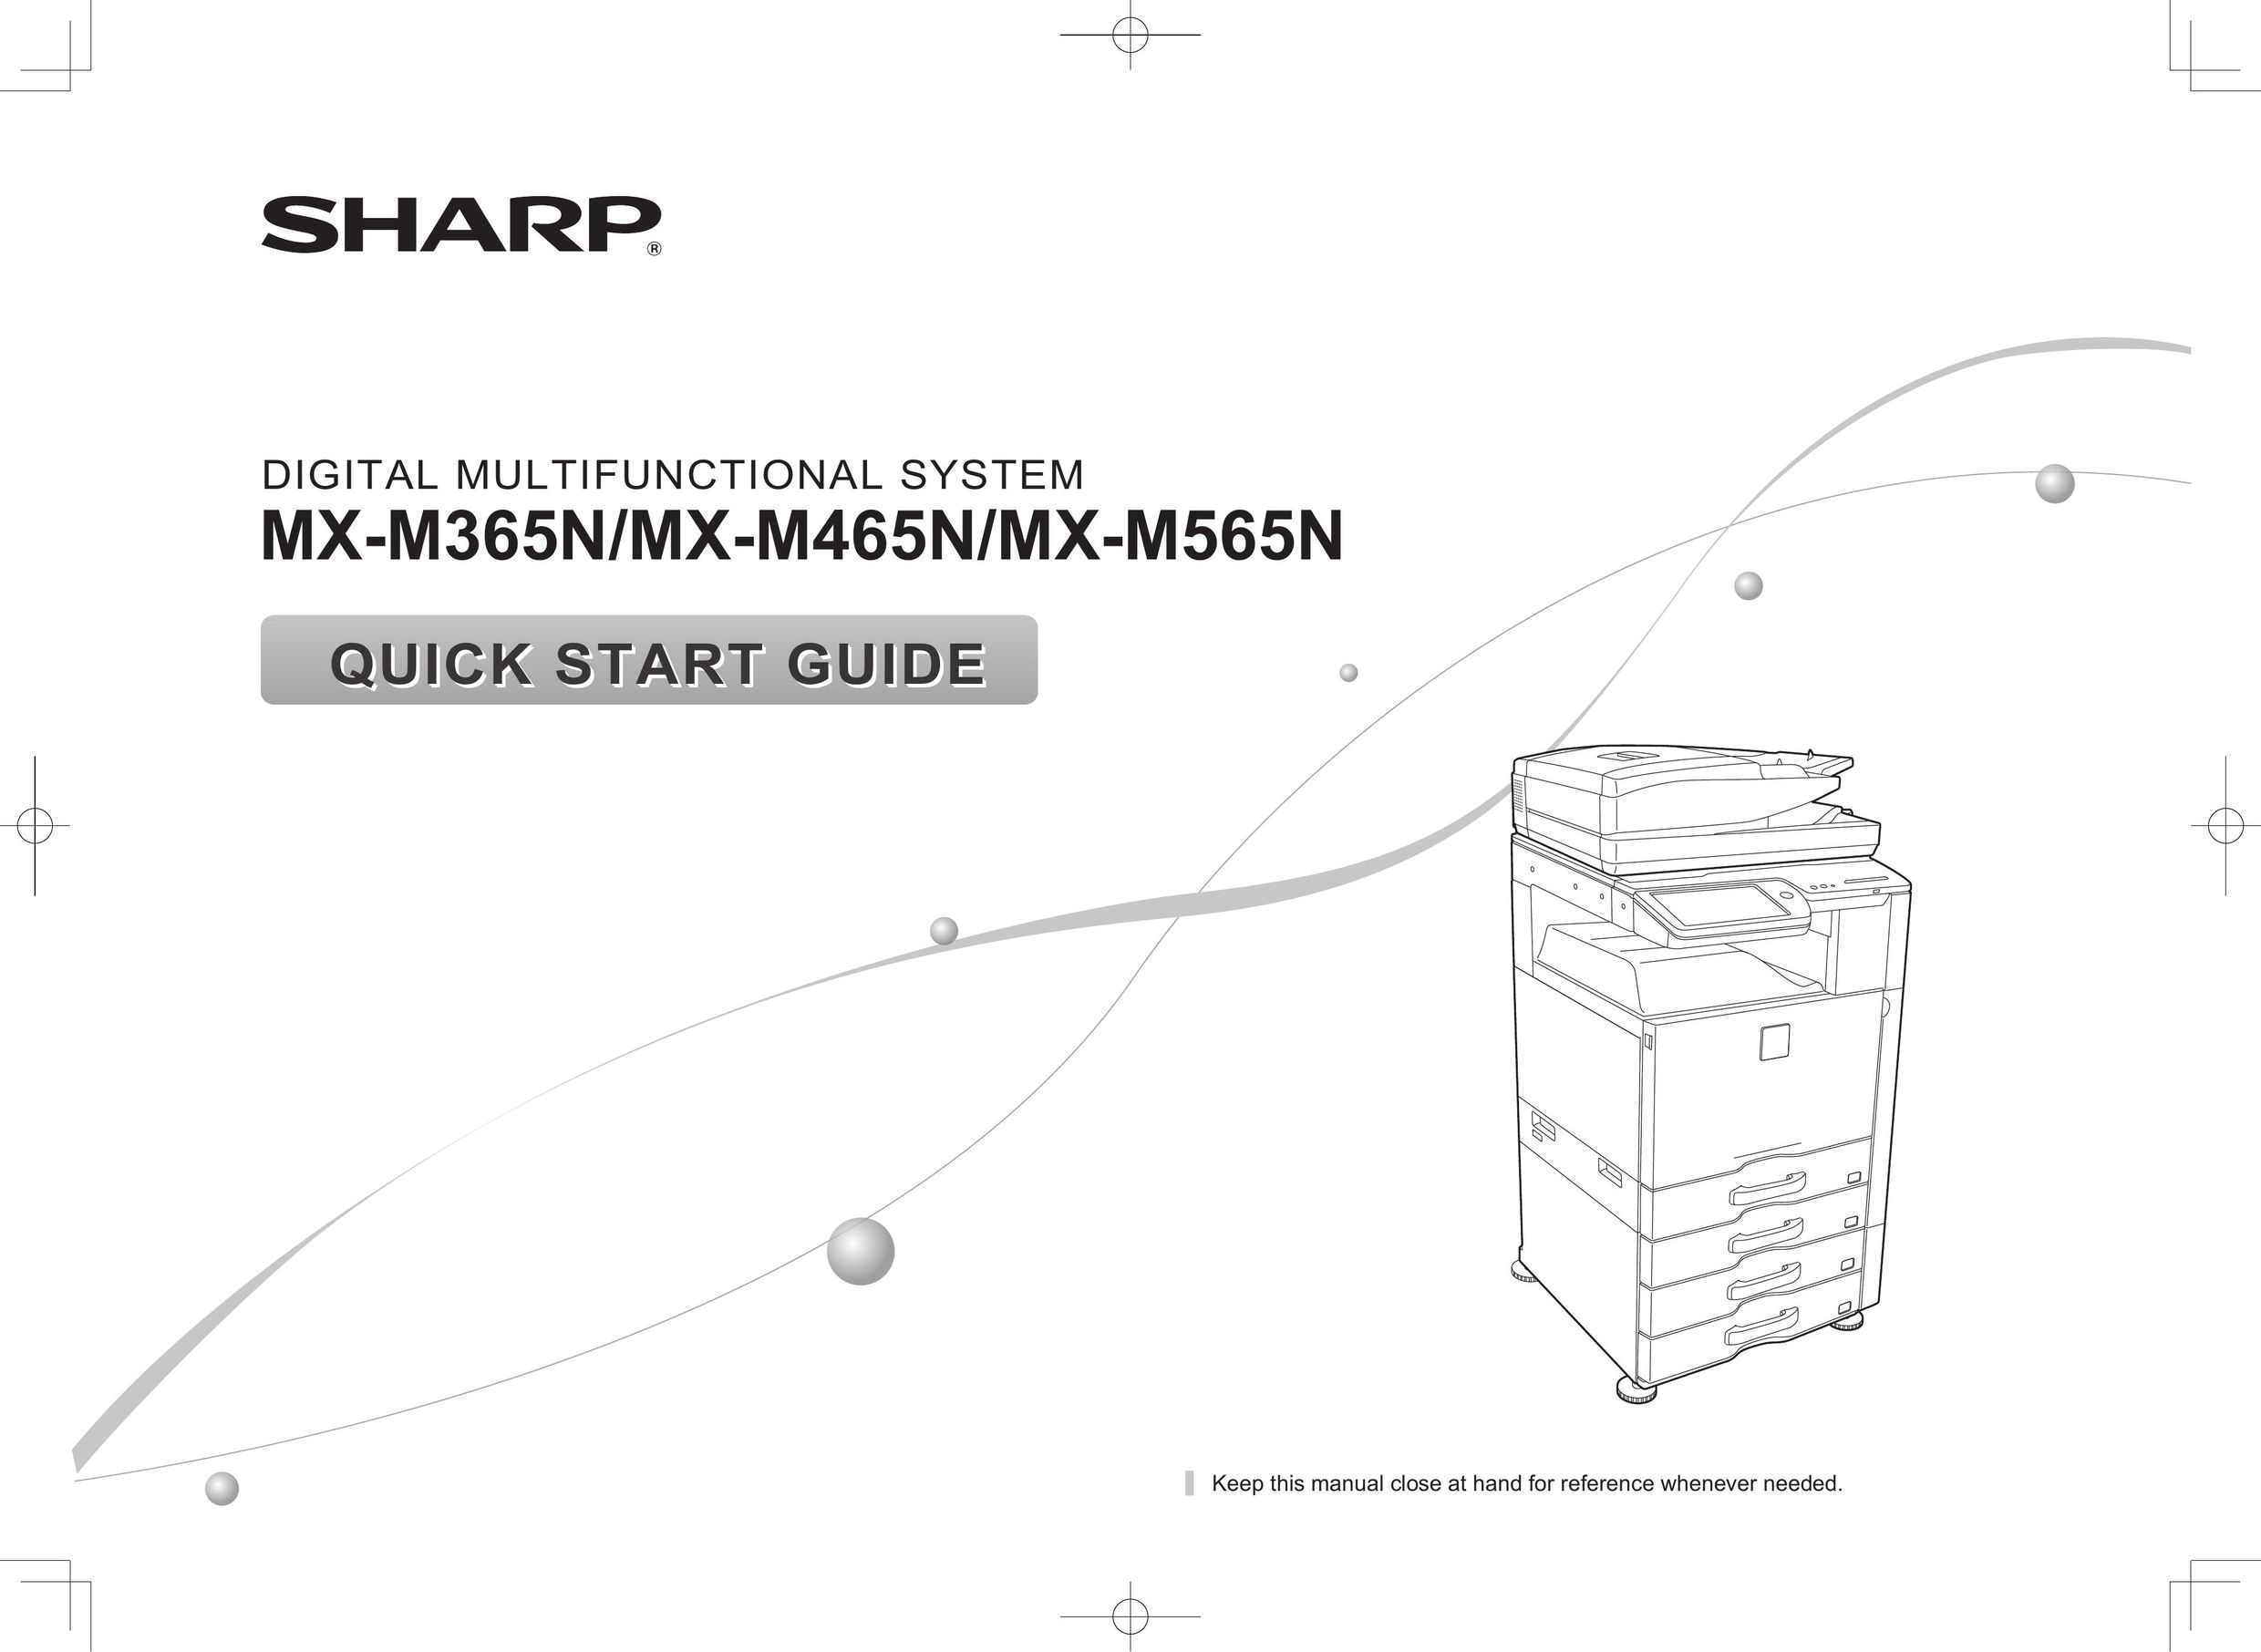 Sharp MX-M365N Fax Machine User Manual